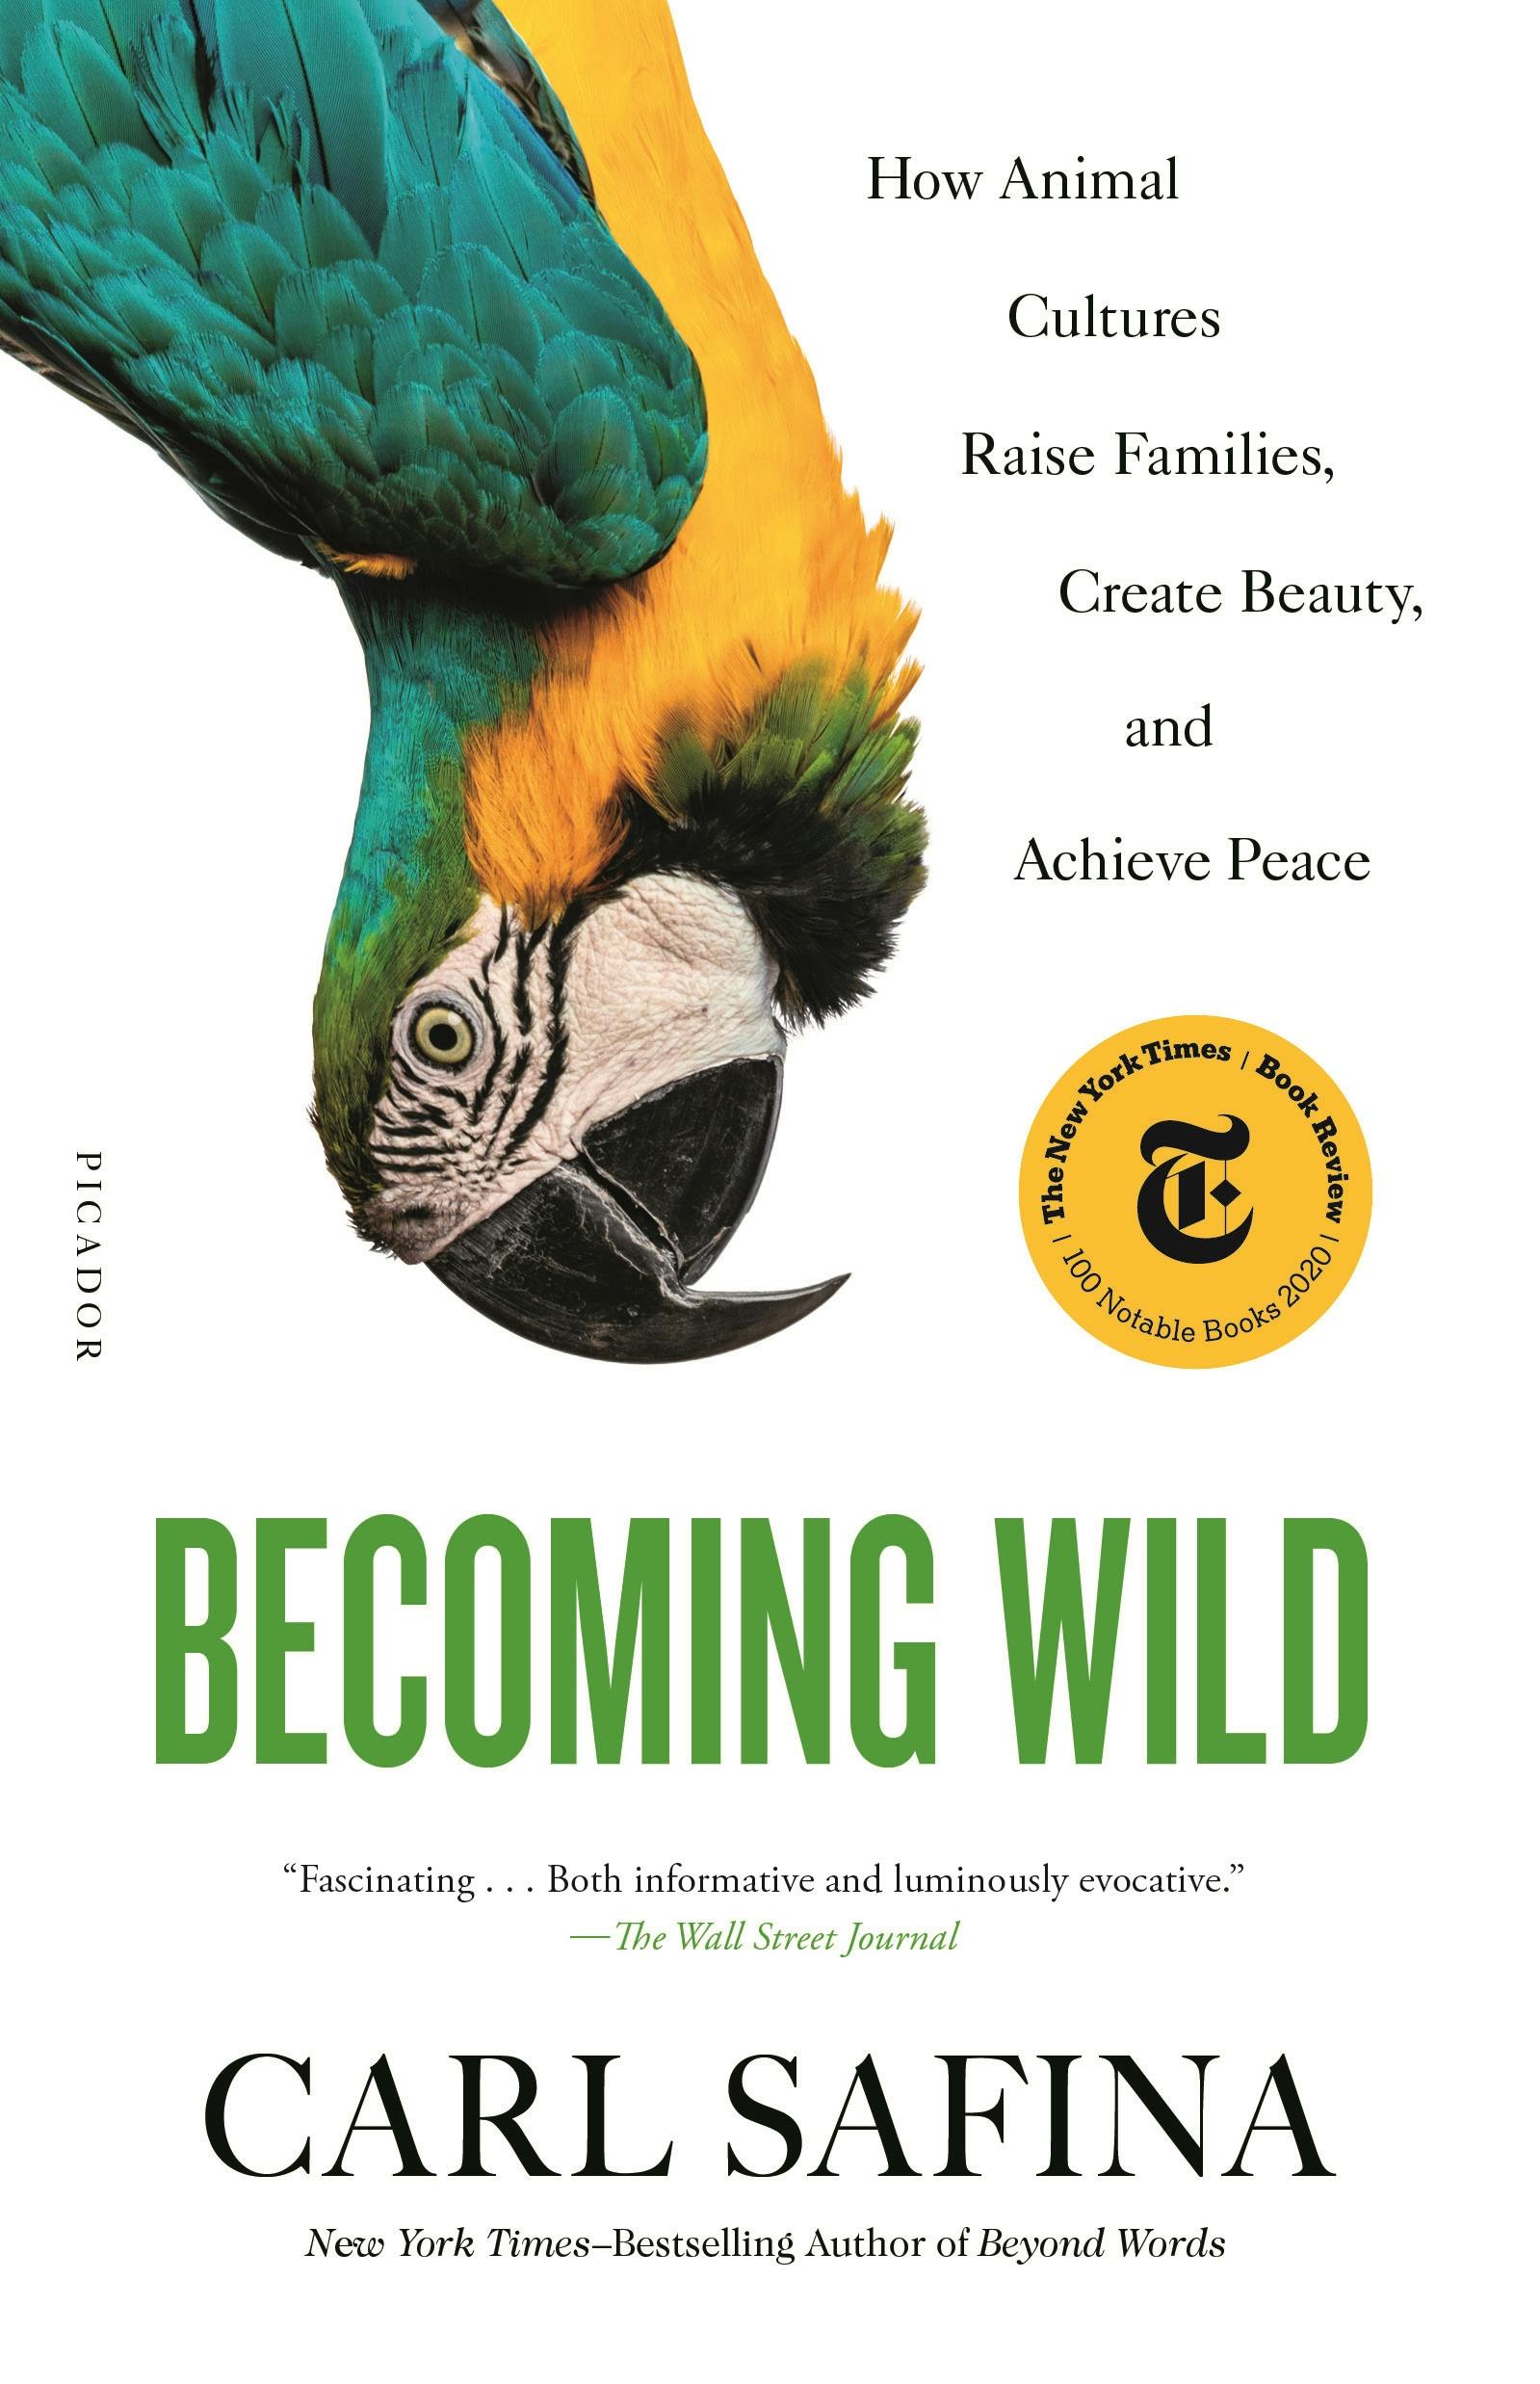 Birds of Prey Books - Brain Power Family